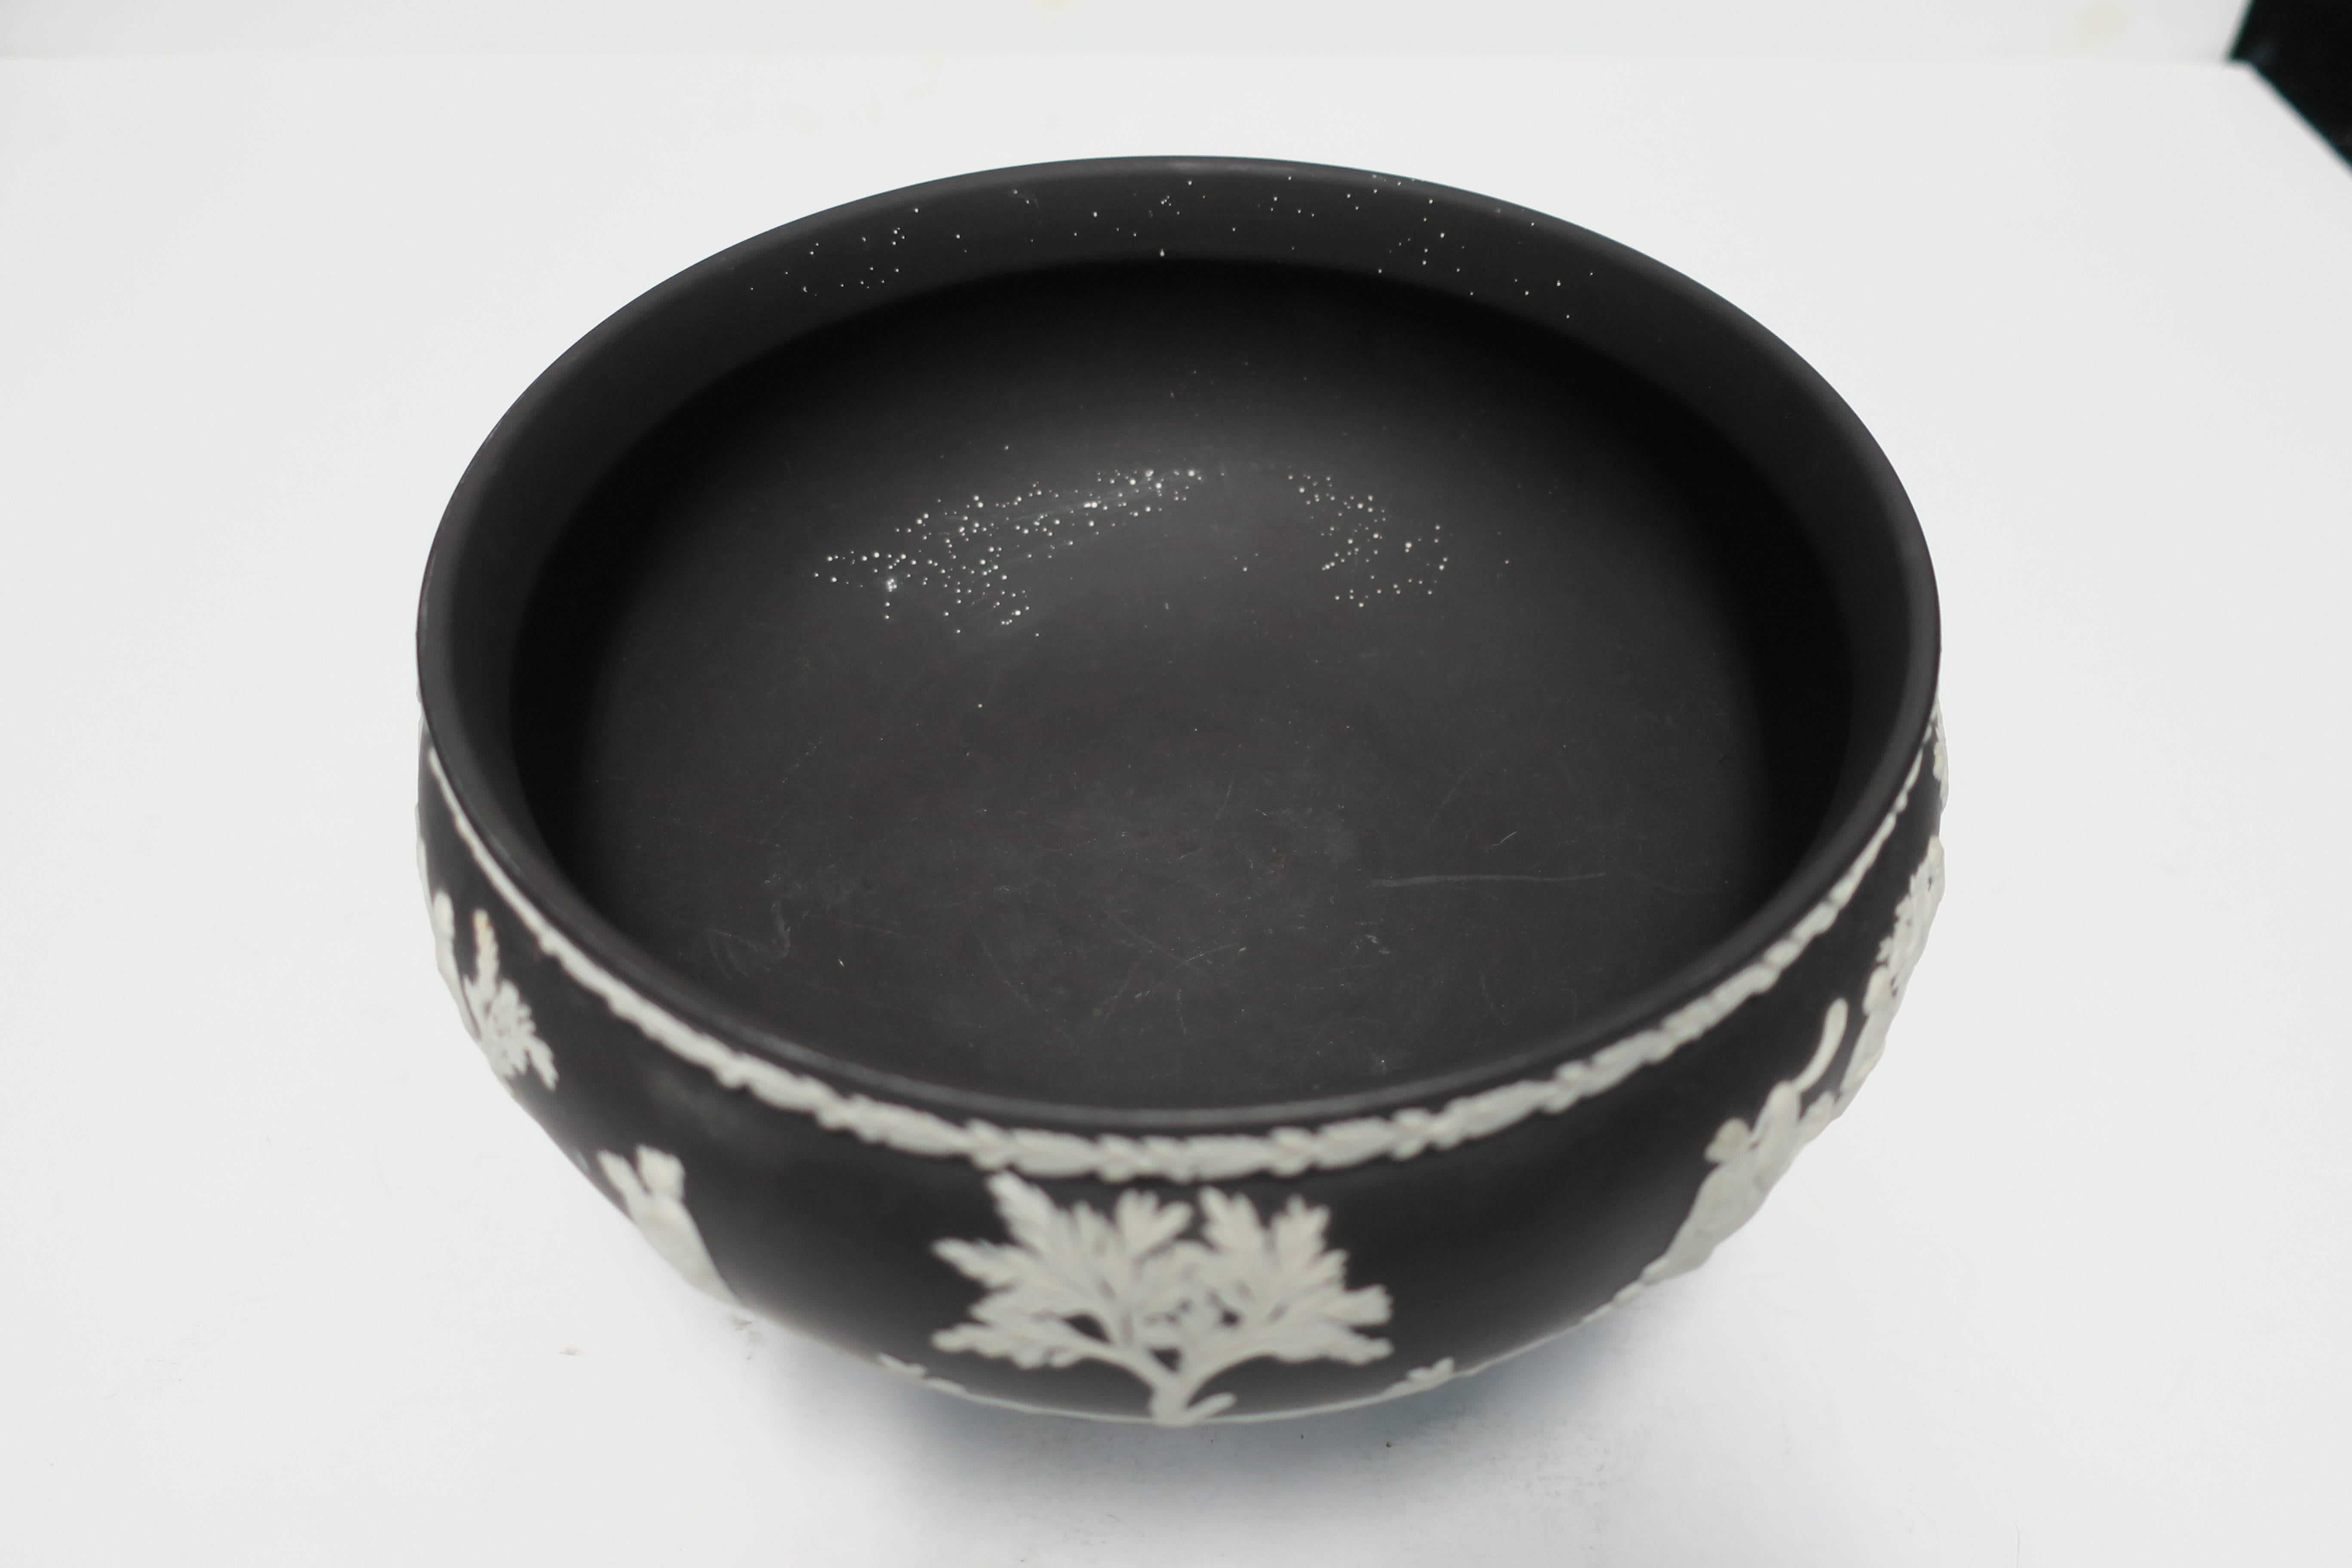 20th Century Black and White Basalt Wedgwood Jasperware Urn or Centerpiece Bowl